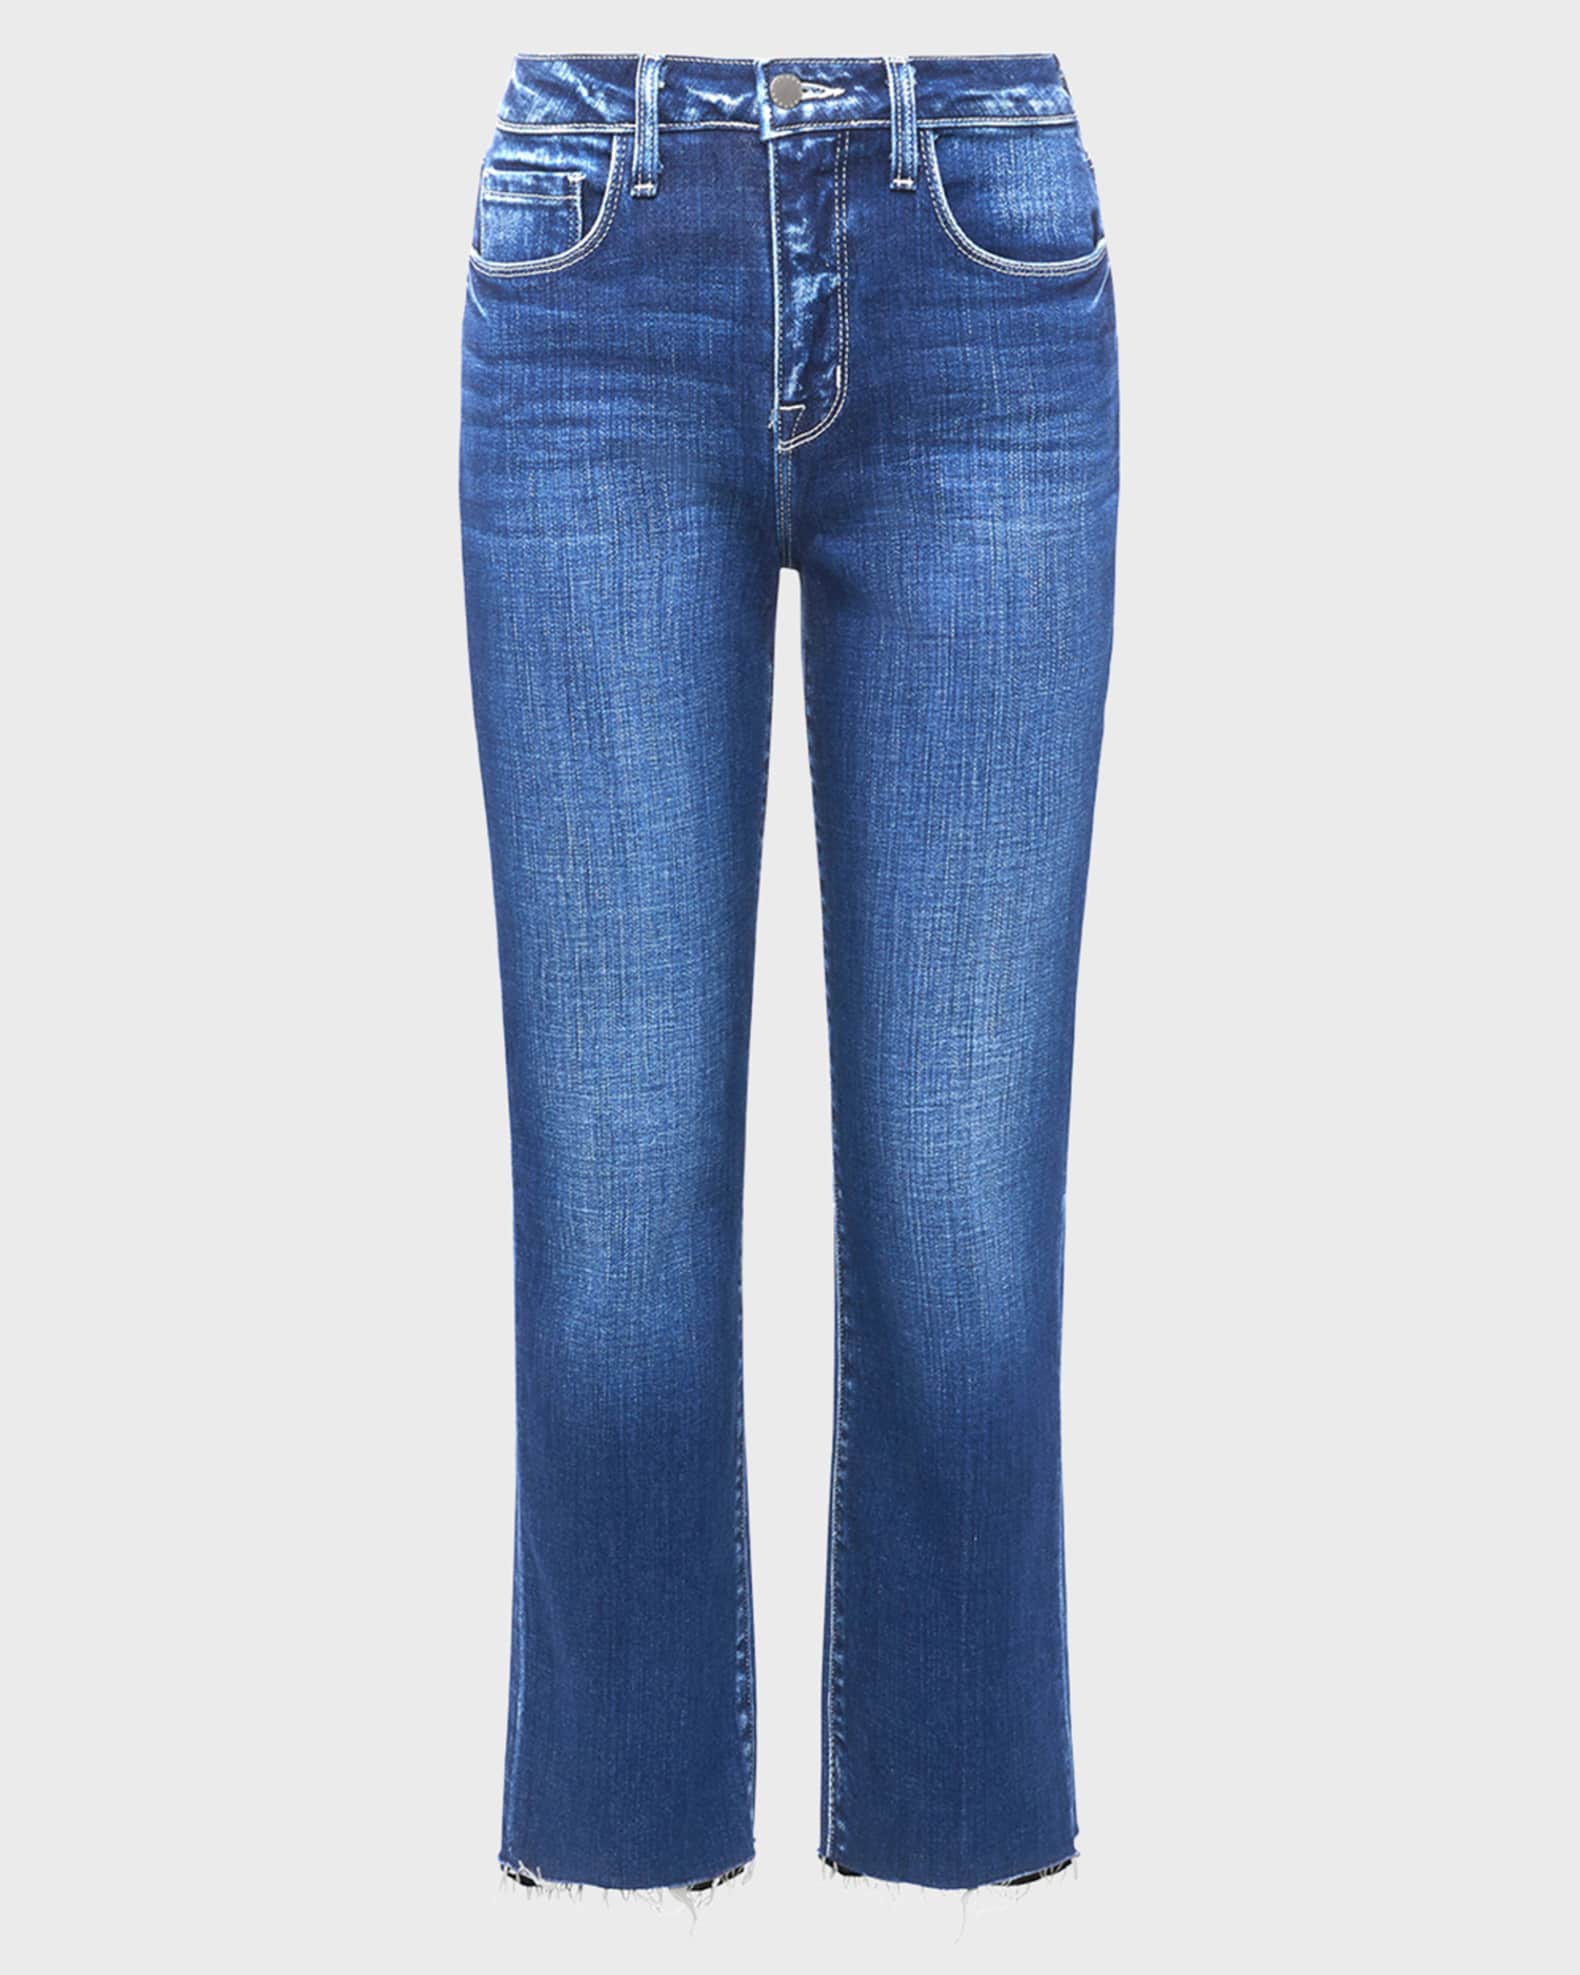 L'Agence Sada High Rise Slim Crop Jeans | Neiman Marcus